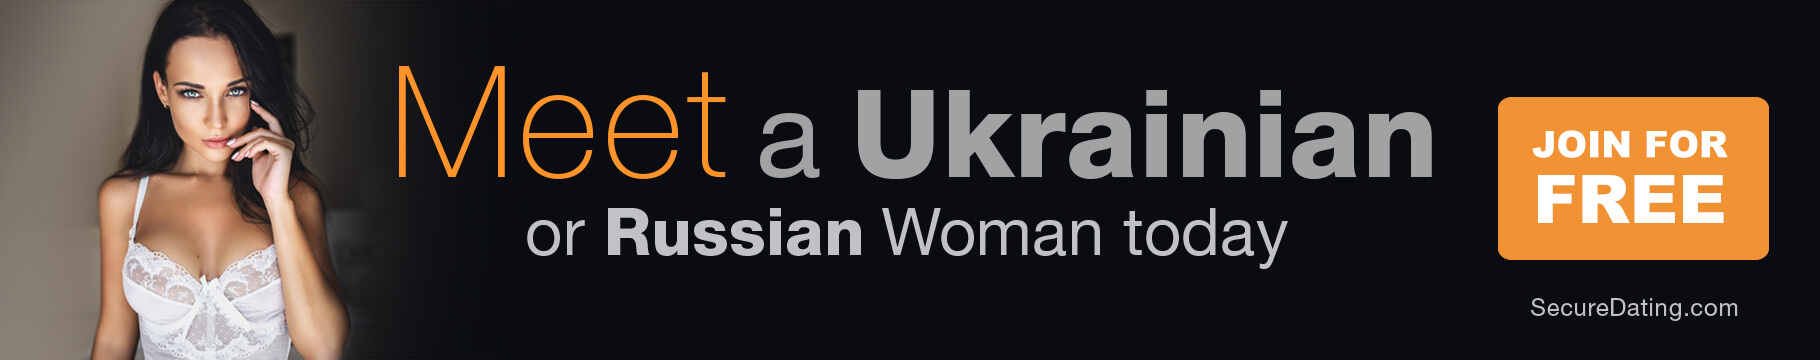 Meet a Ukrainian or Russian woman today